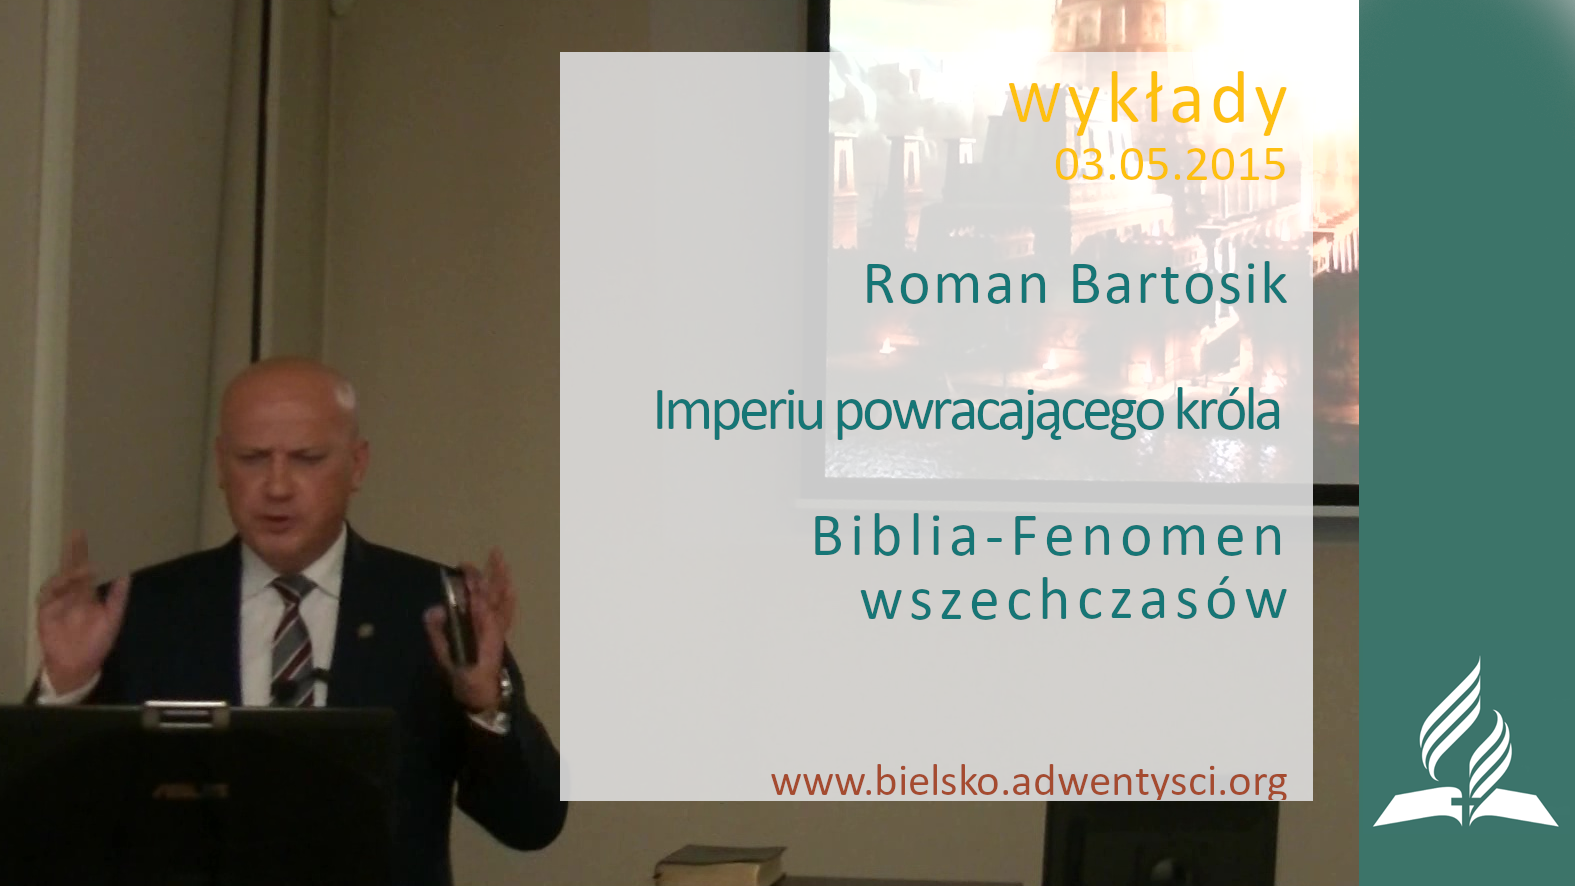 Roman Bartosik - Wykłady  17 12 2016